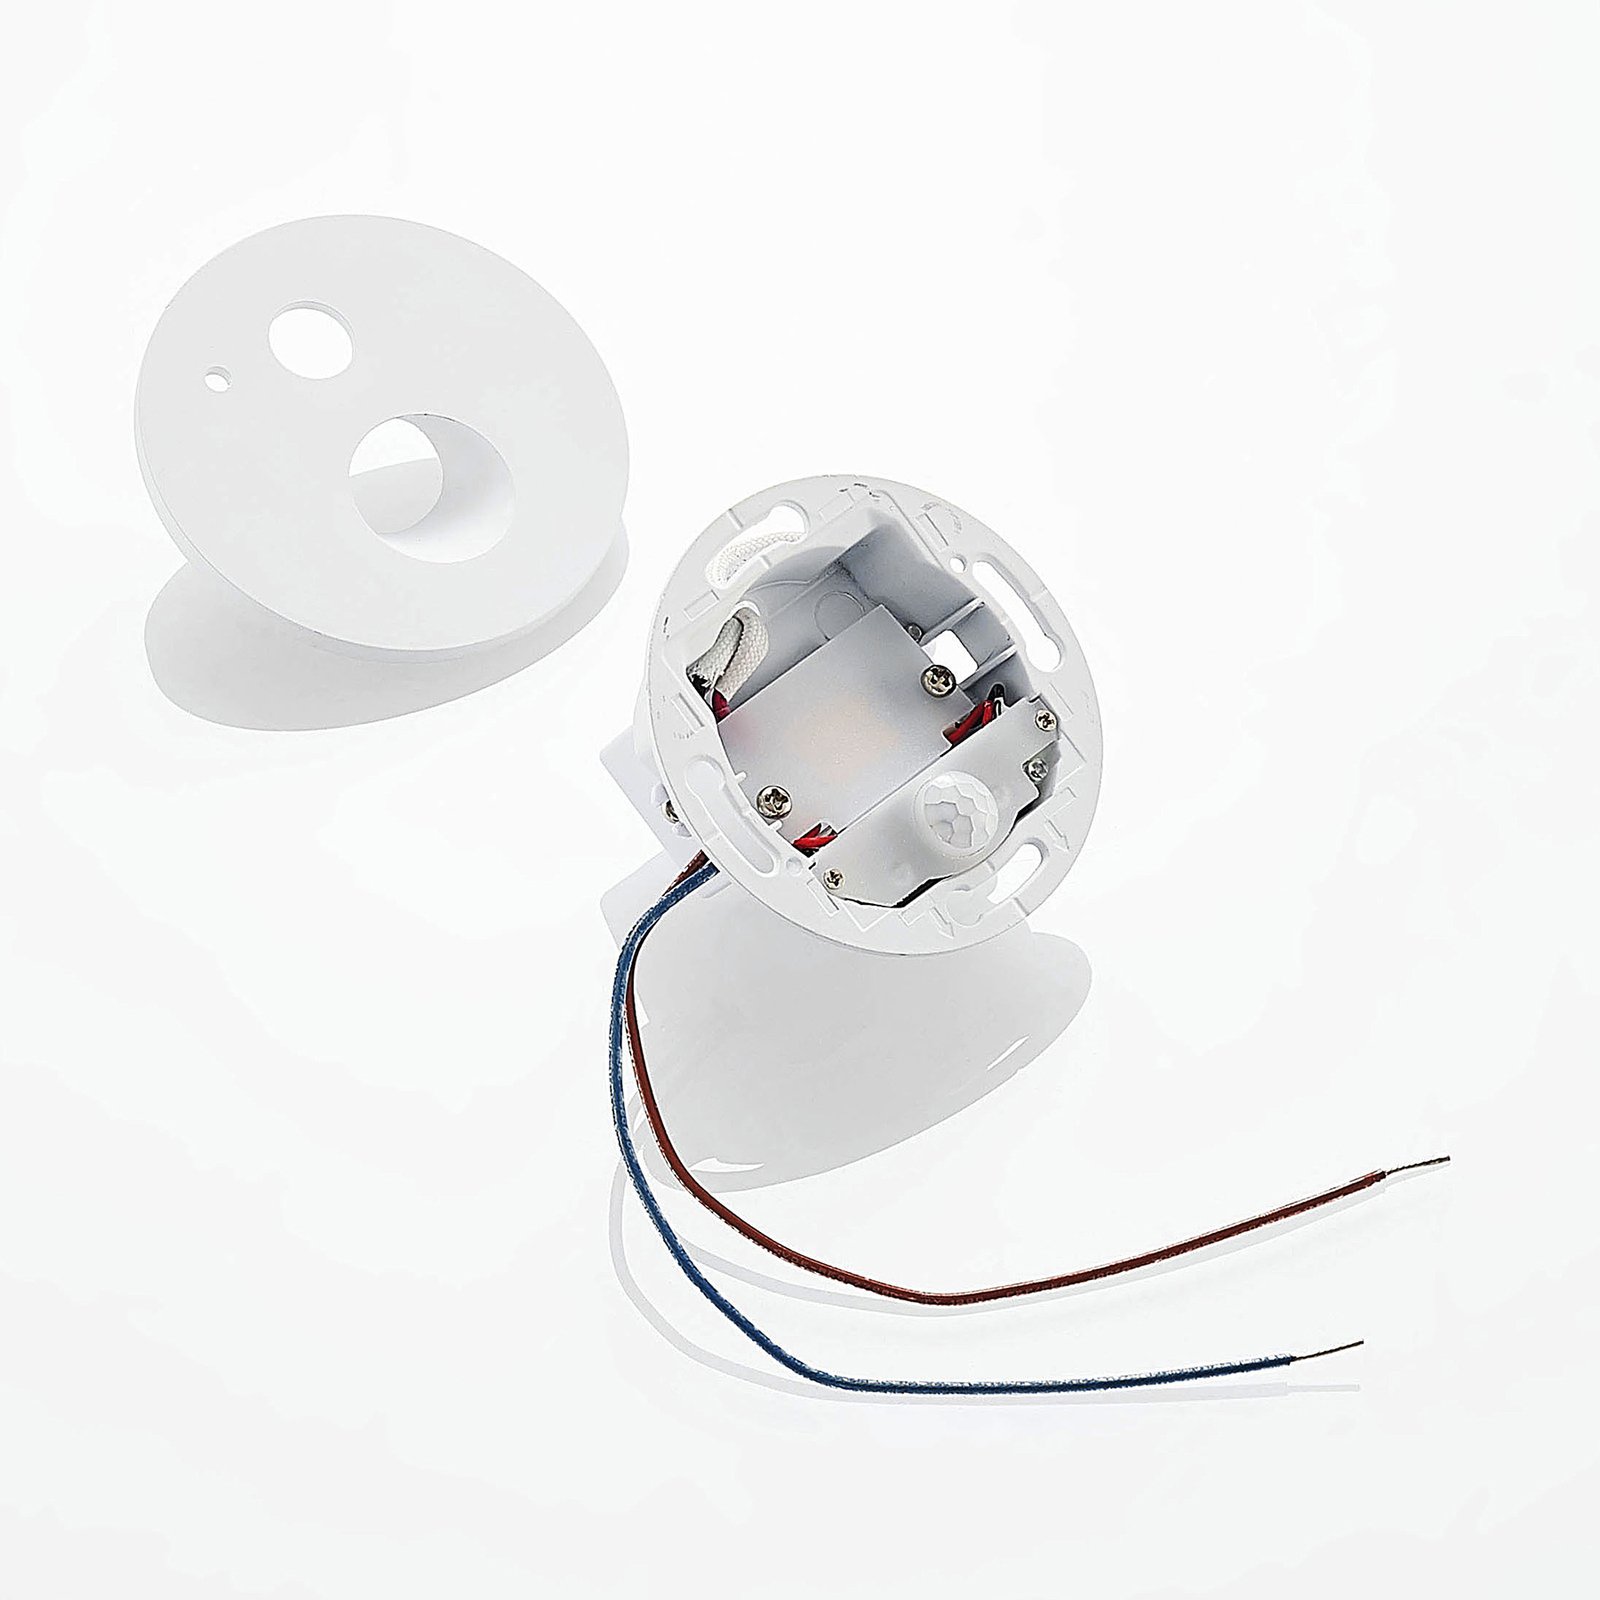 Arcchio Neru LED inbouwlamp, rond, wit